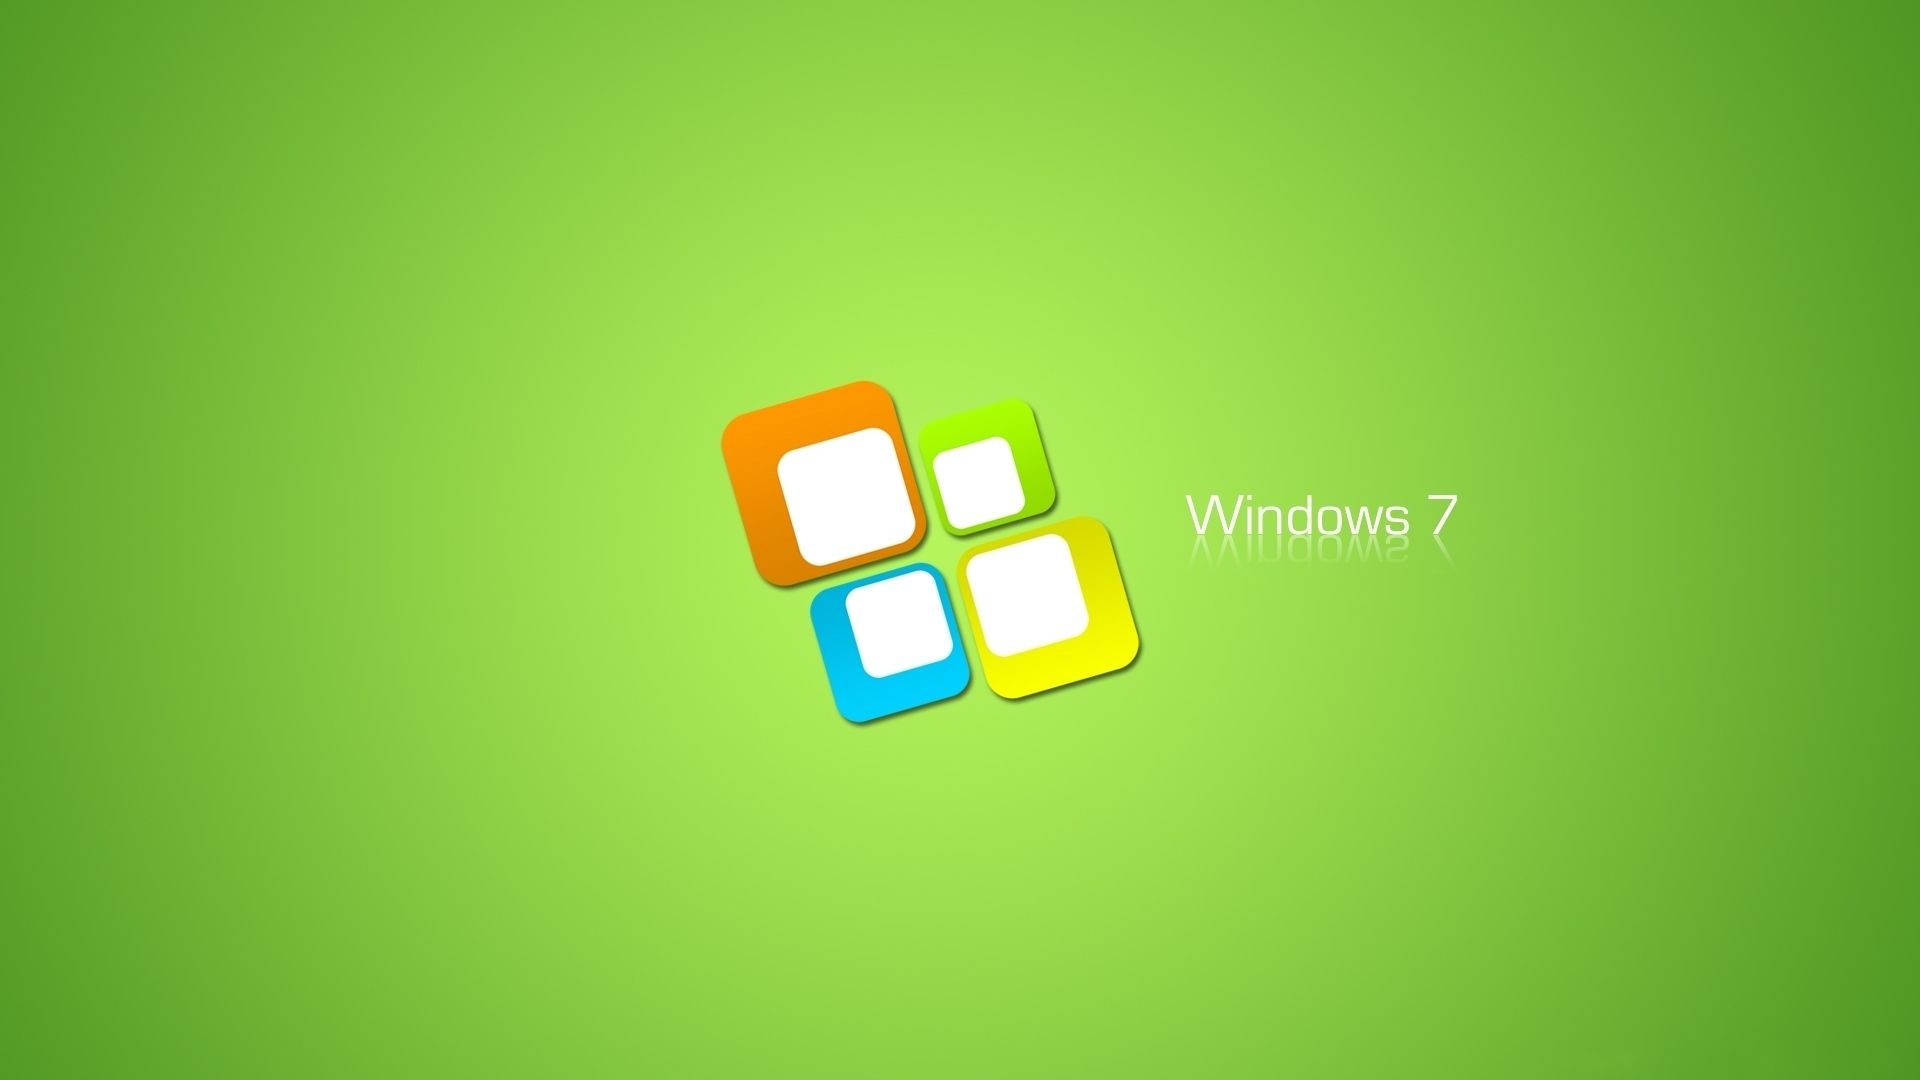 Download Wallpaper 1920x1080 Windows 7, Square, White, Blue, Green